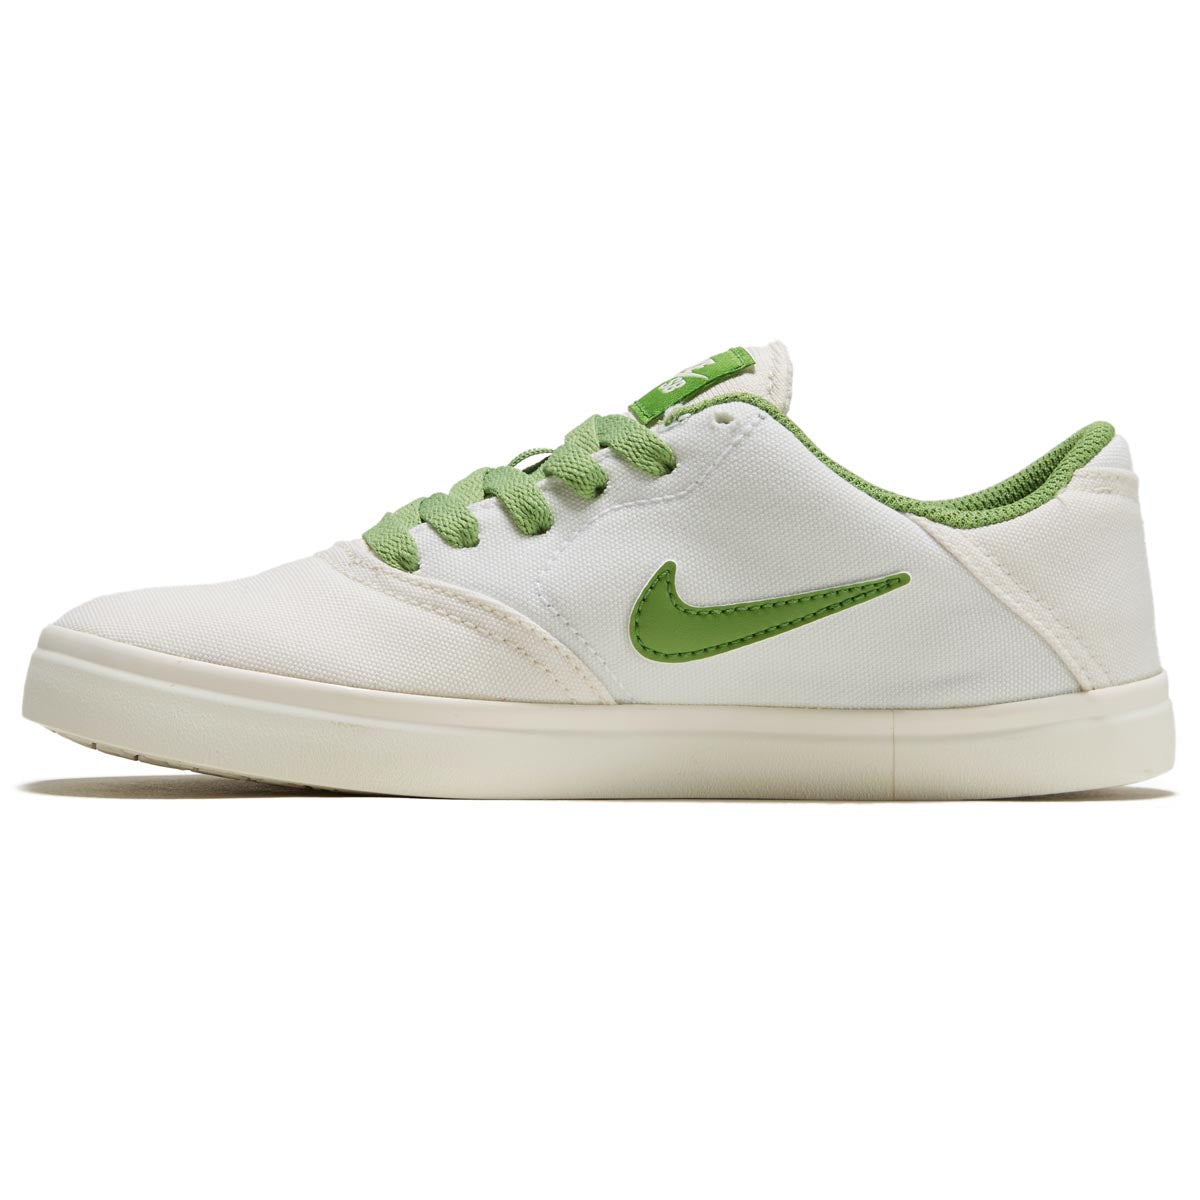 Nike SB Check Canvas Shoes - Phantom/Chlorophyll/Summit White/Sail image 2